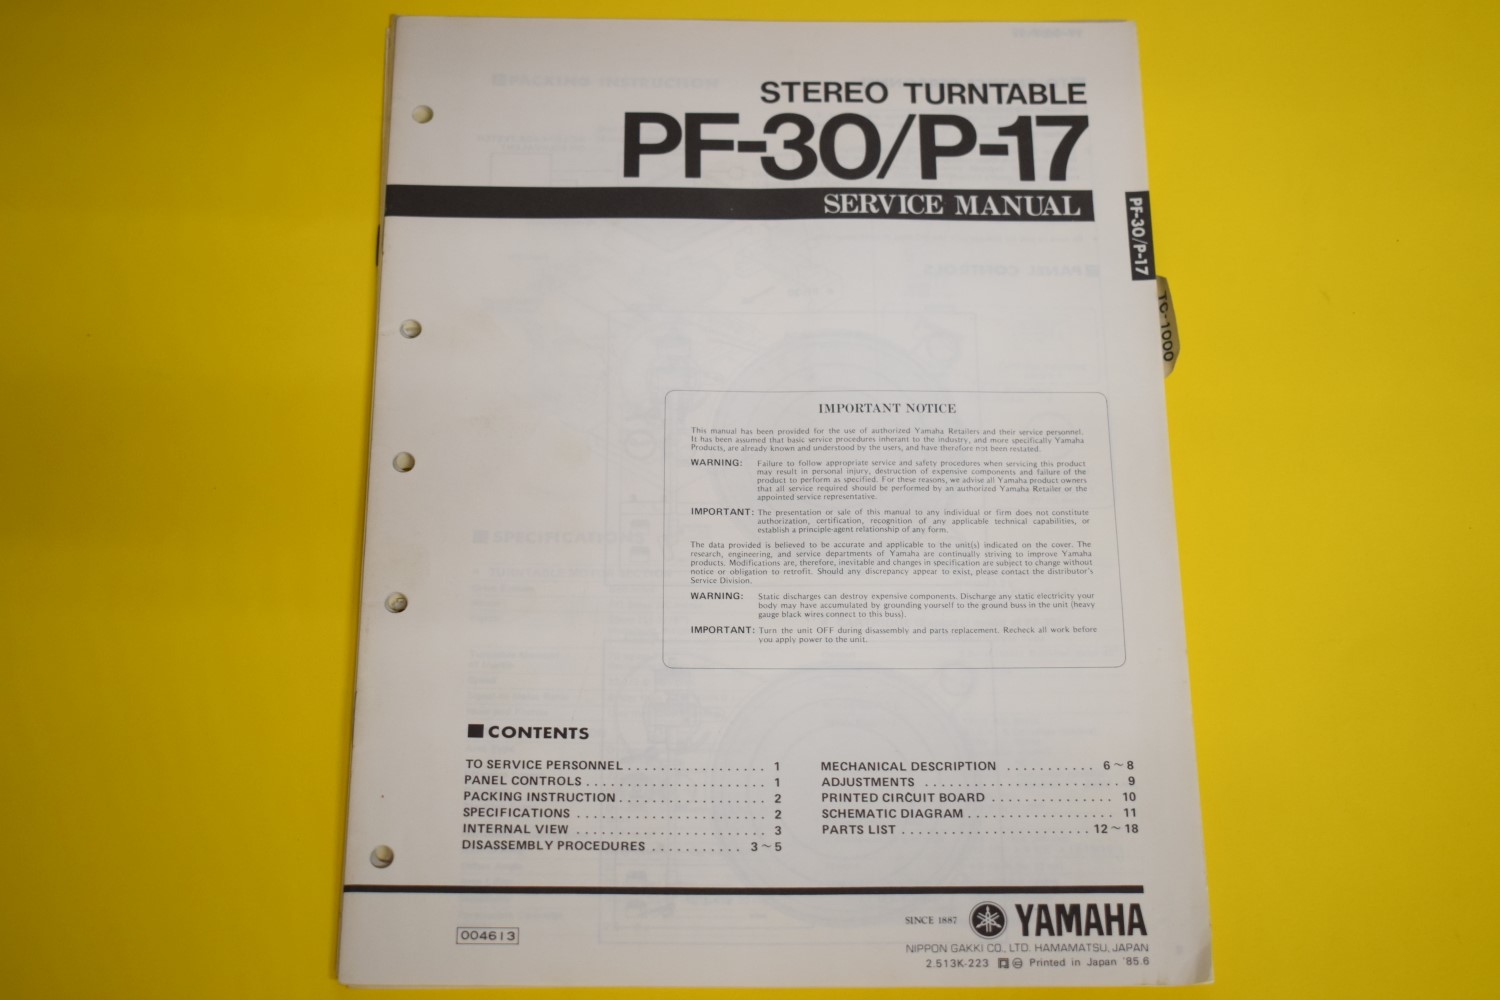 Yamaha PF-30/P-17 Turntable Service Manual